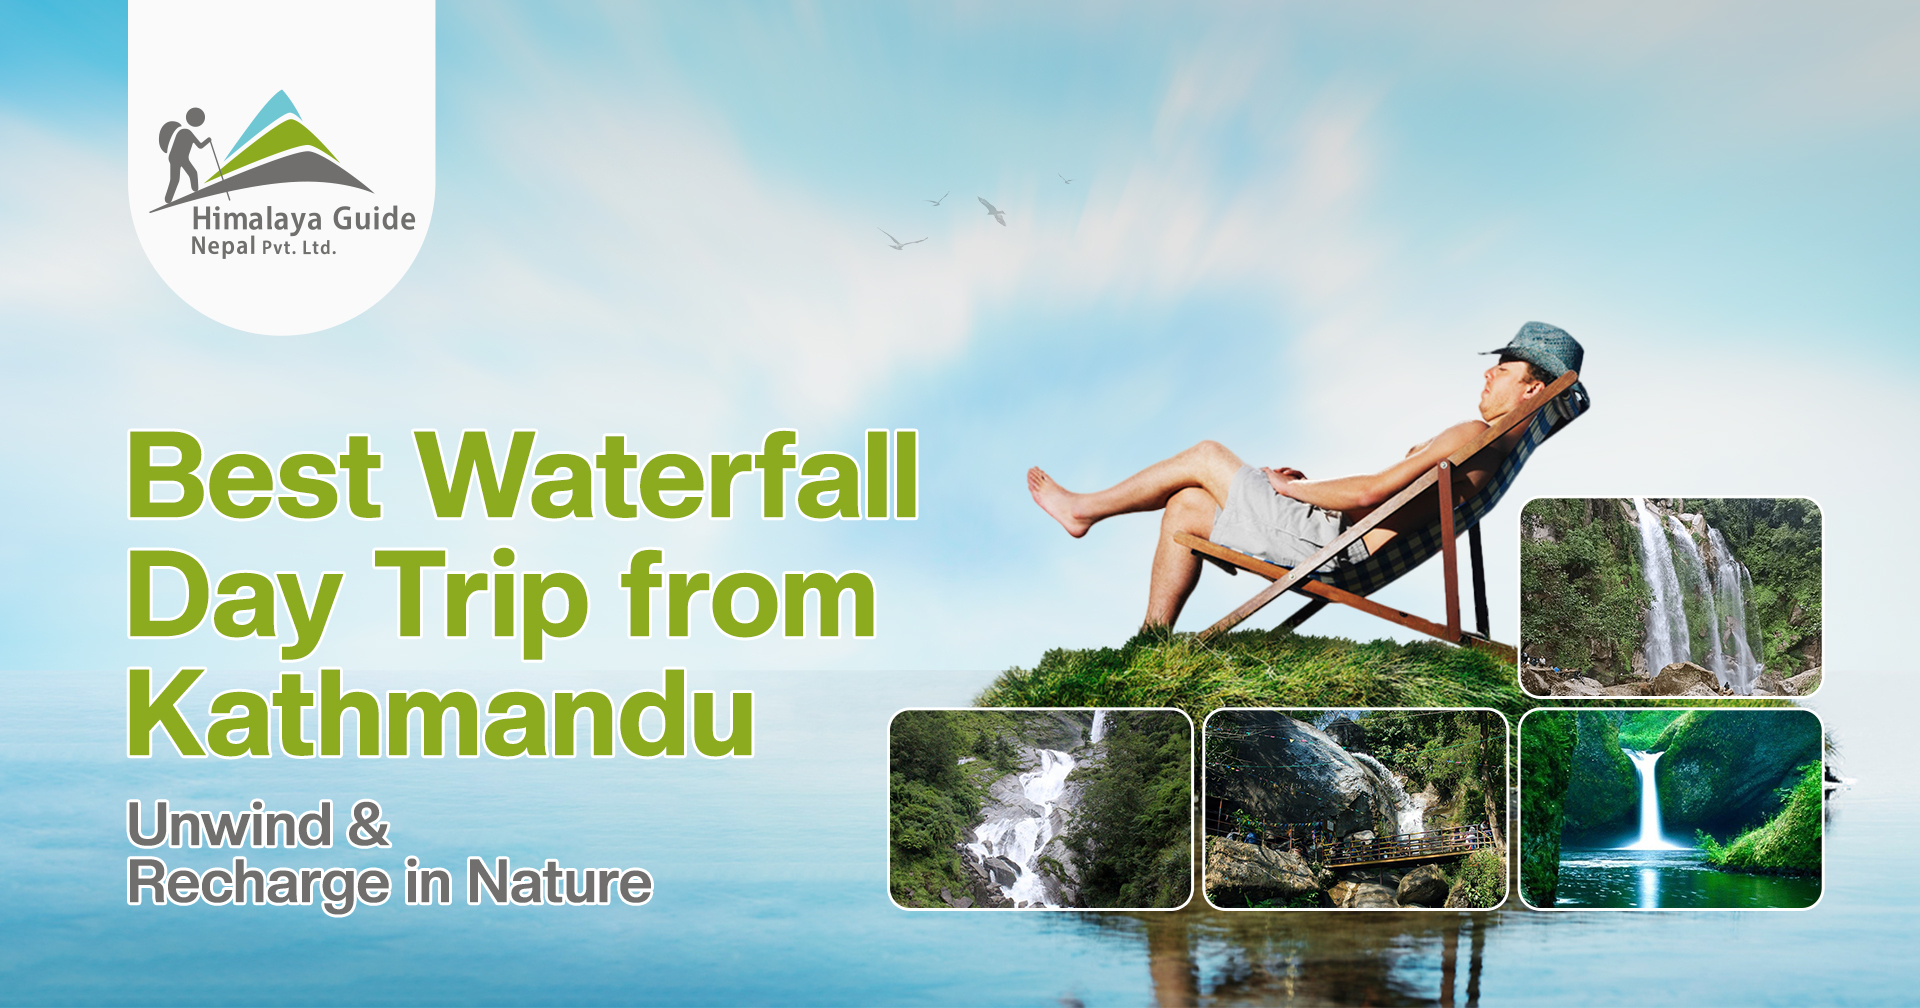 Best Waterfall Day Trip from Kathmandu: Unwind & Recharge in Nature